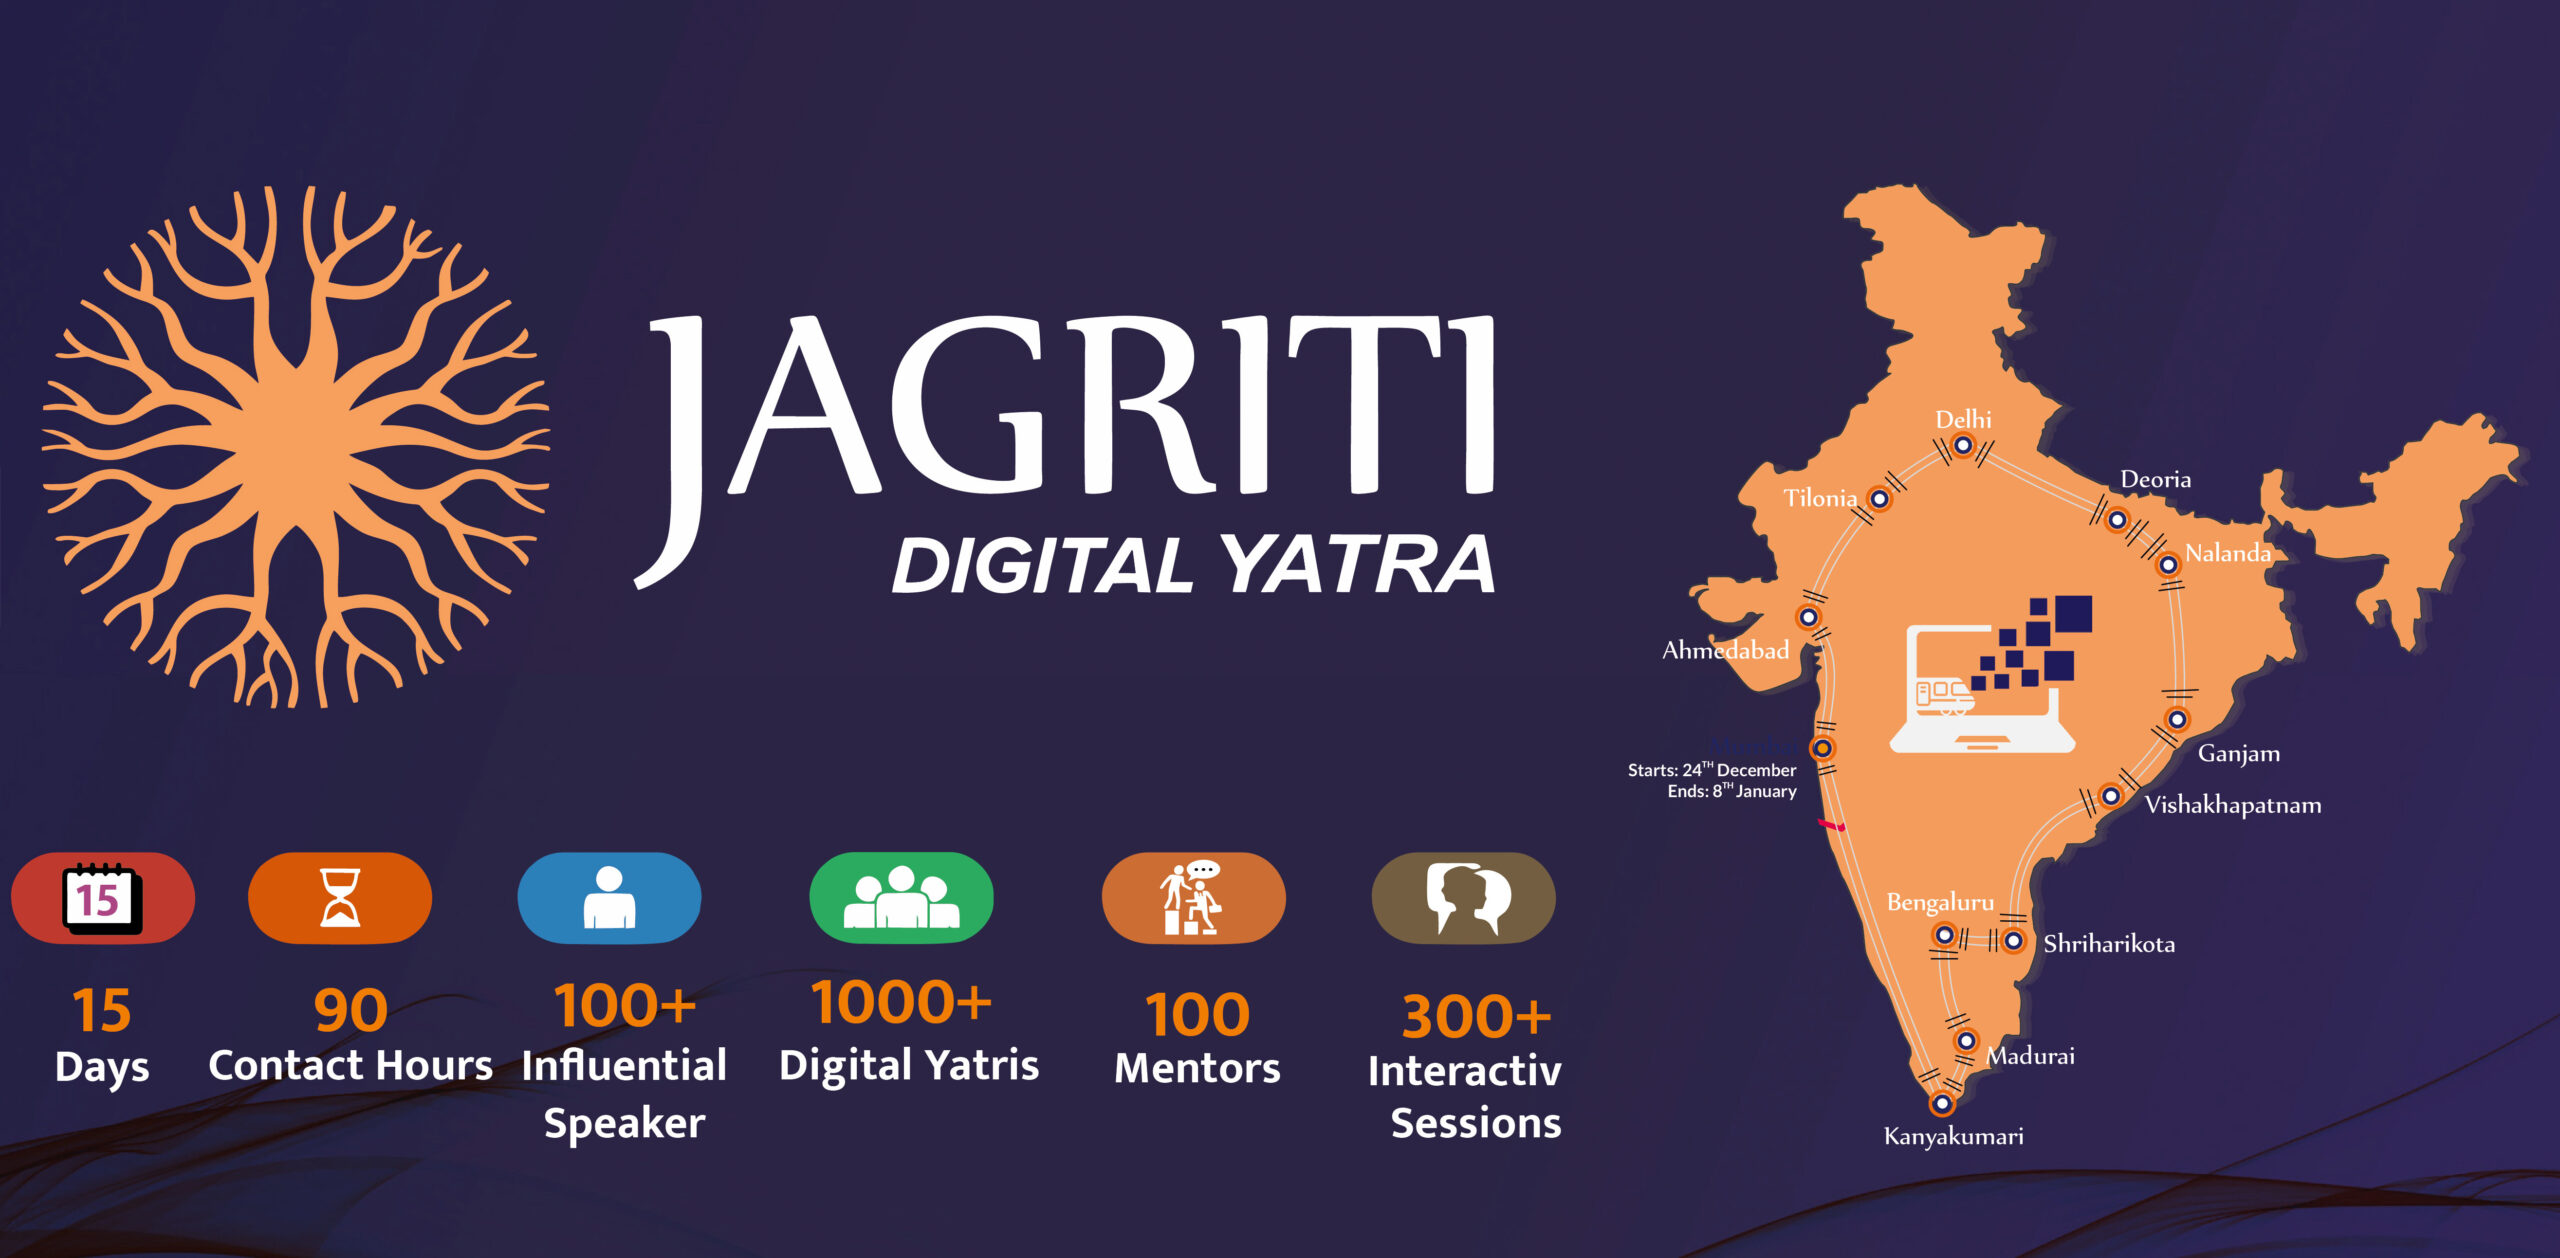 Jagriti Digital Yatra recreates the digital entrepreneurship program. This time, it’s the world’s largest with 850 Yatris.